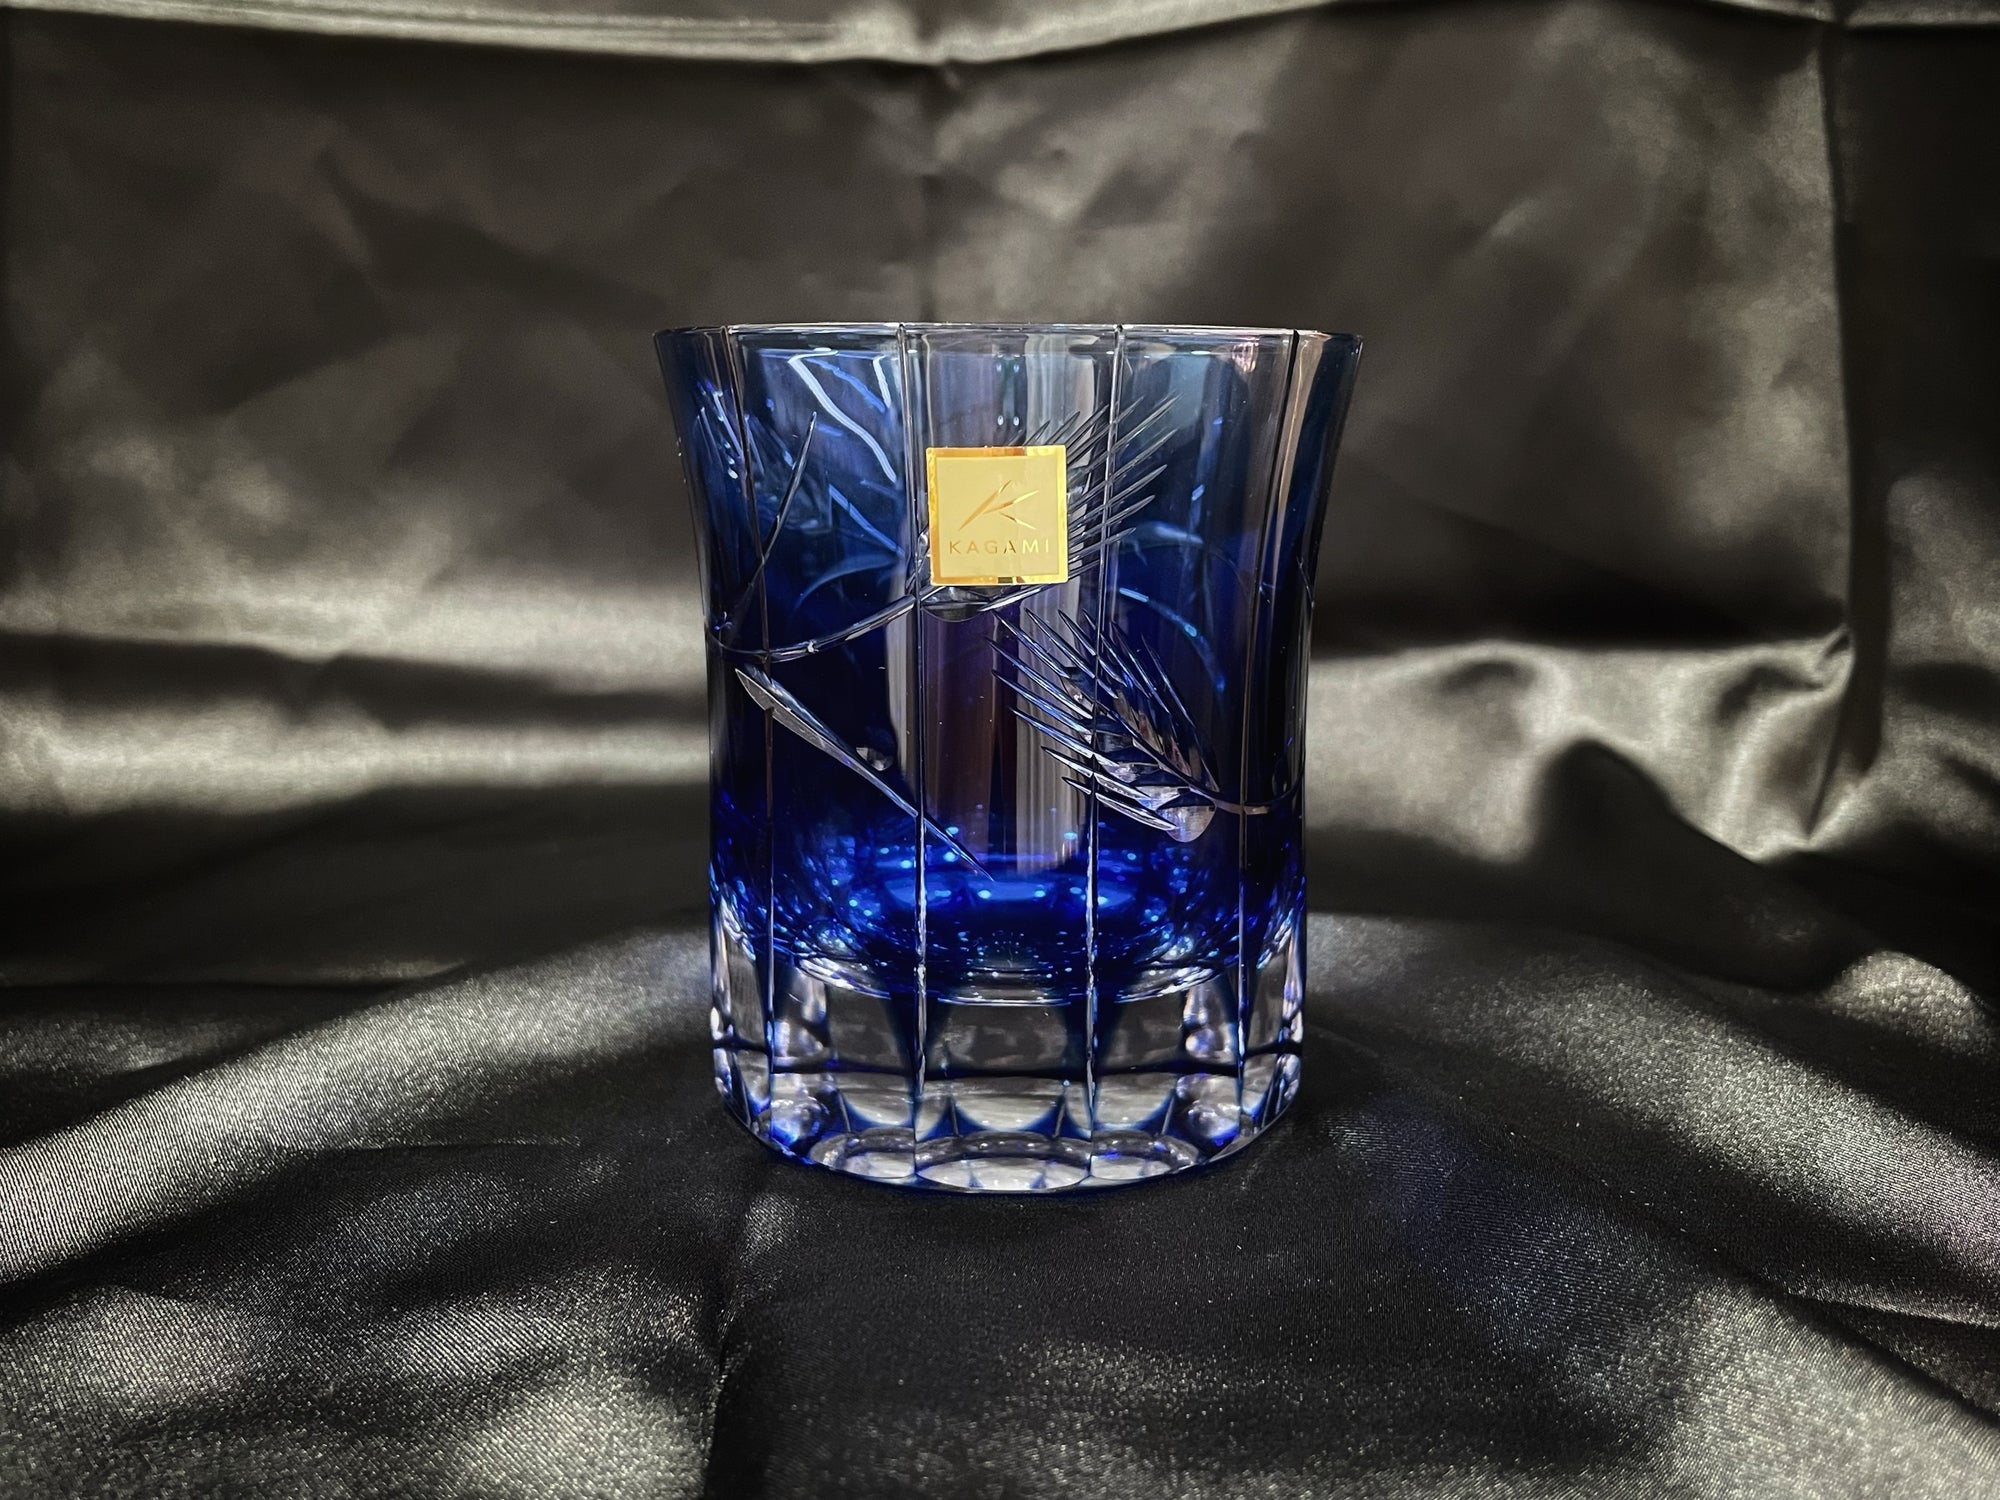 Kagami Whisky Glass by Tatsuya Nemoto - Mugi (pair set)